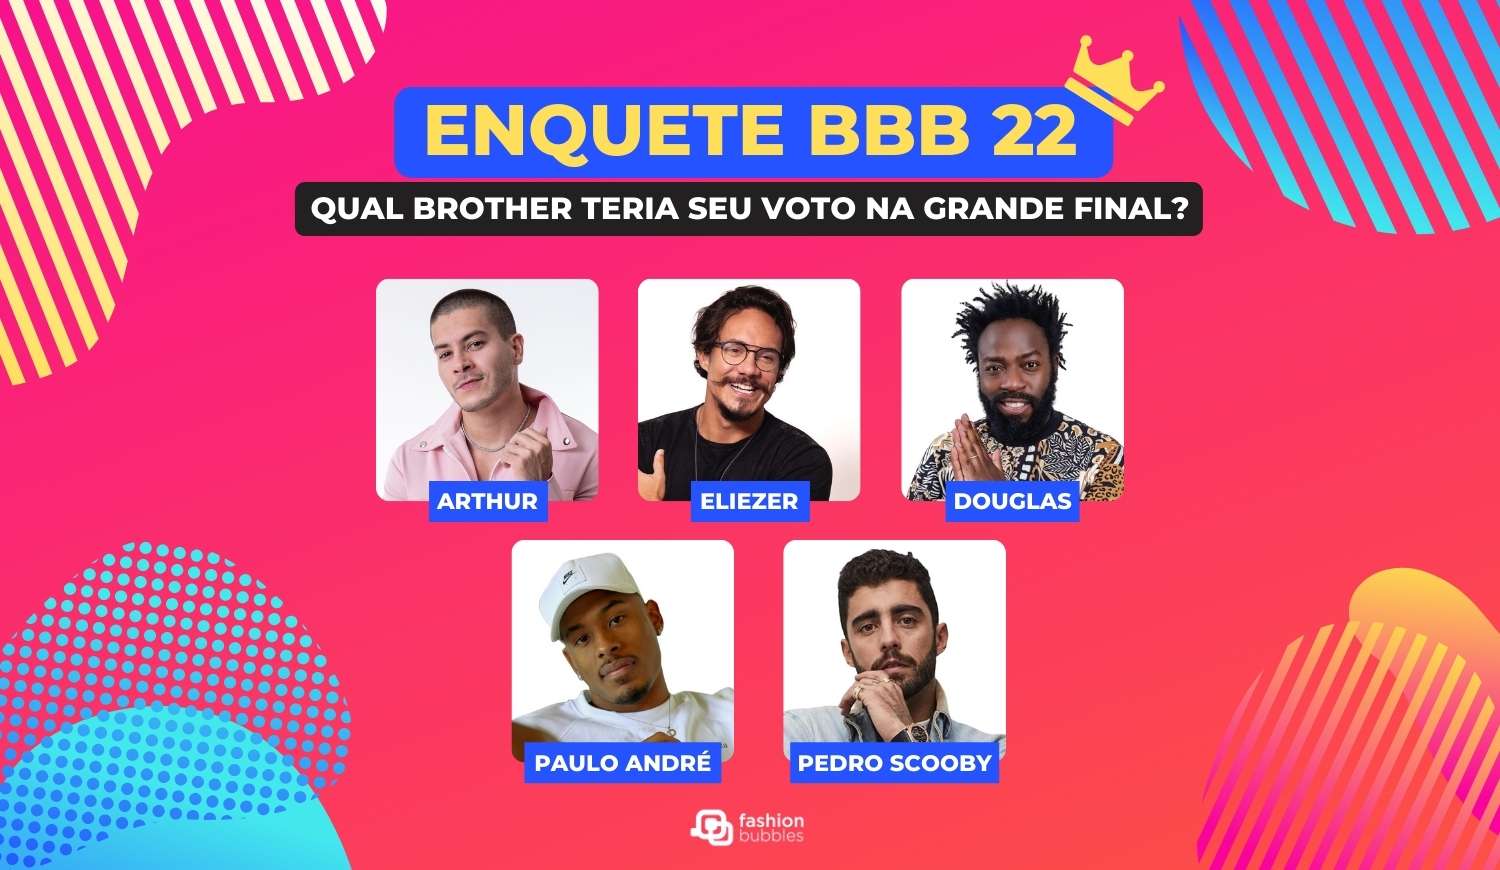 Enquete Top 5 BBB 2022: qual brother teria seu voto na grande final?